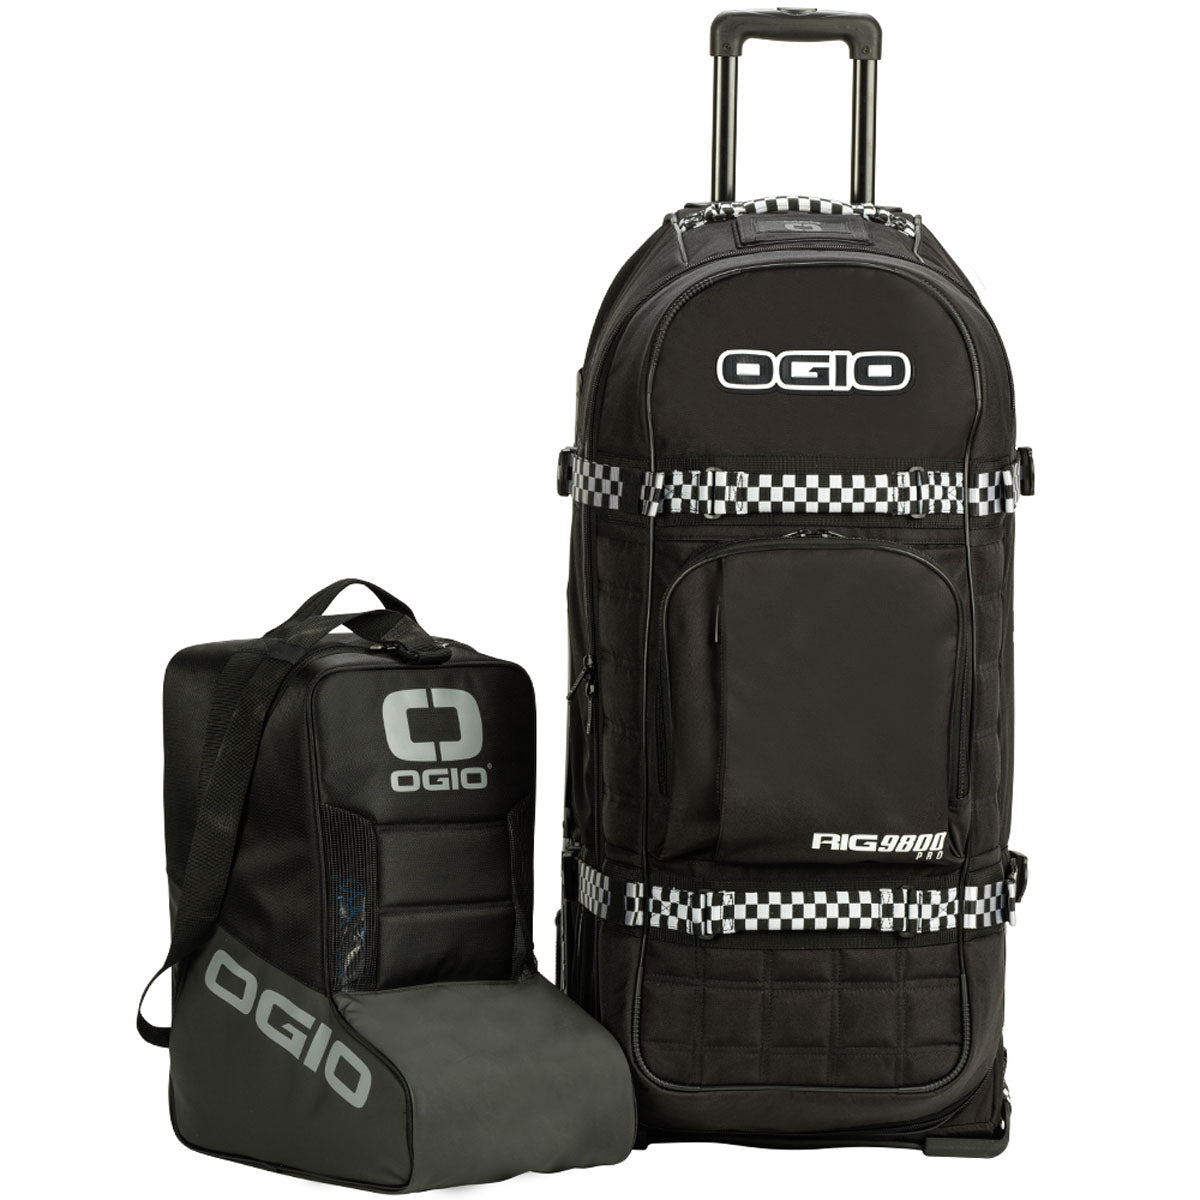 Ogio Rig 9800 Pro Gear Bag  - Fast Times